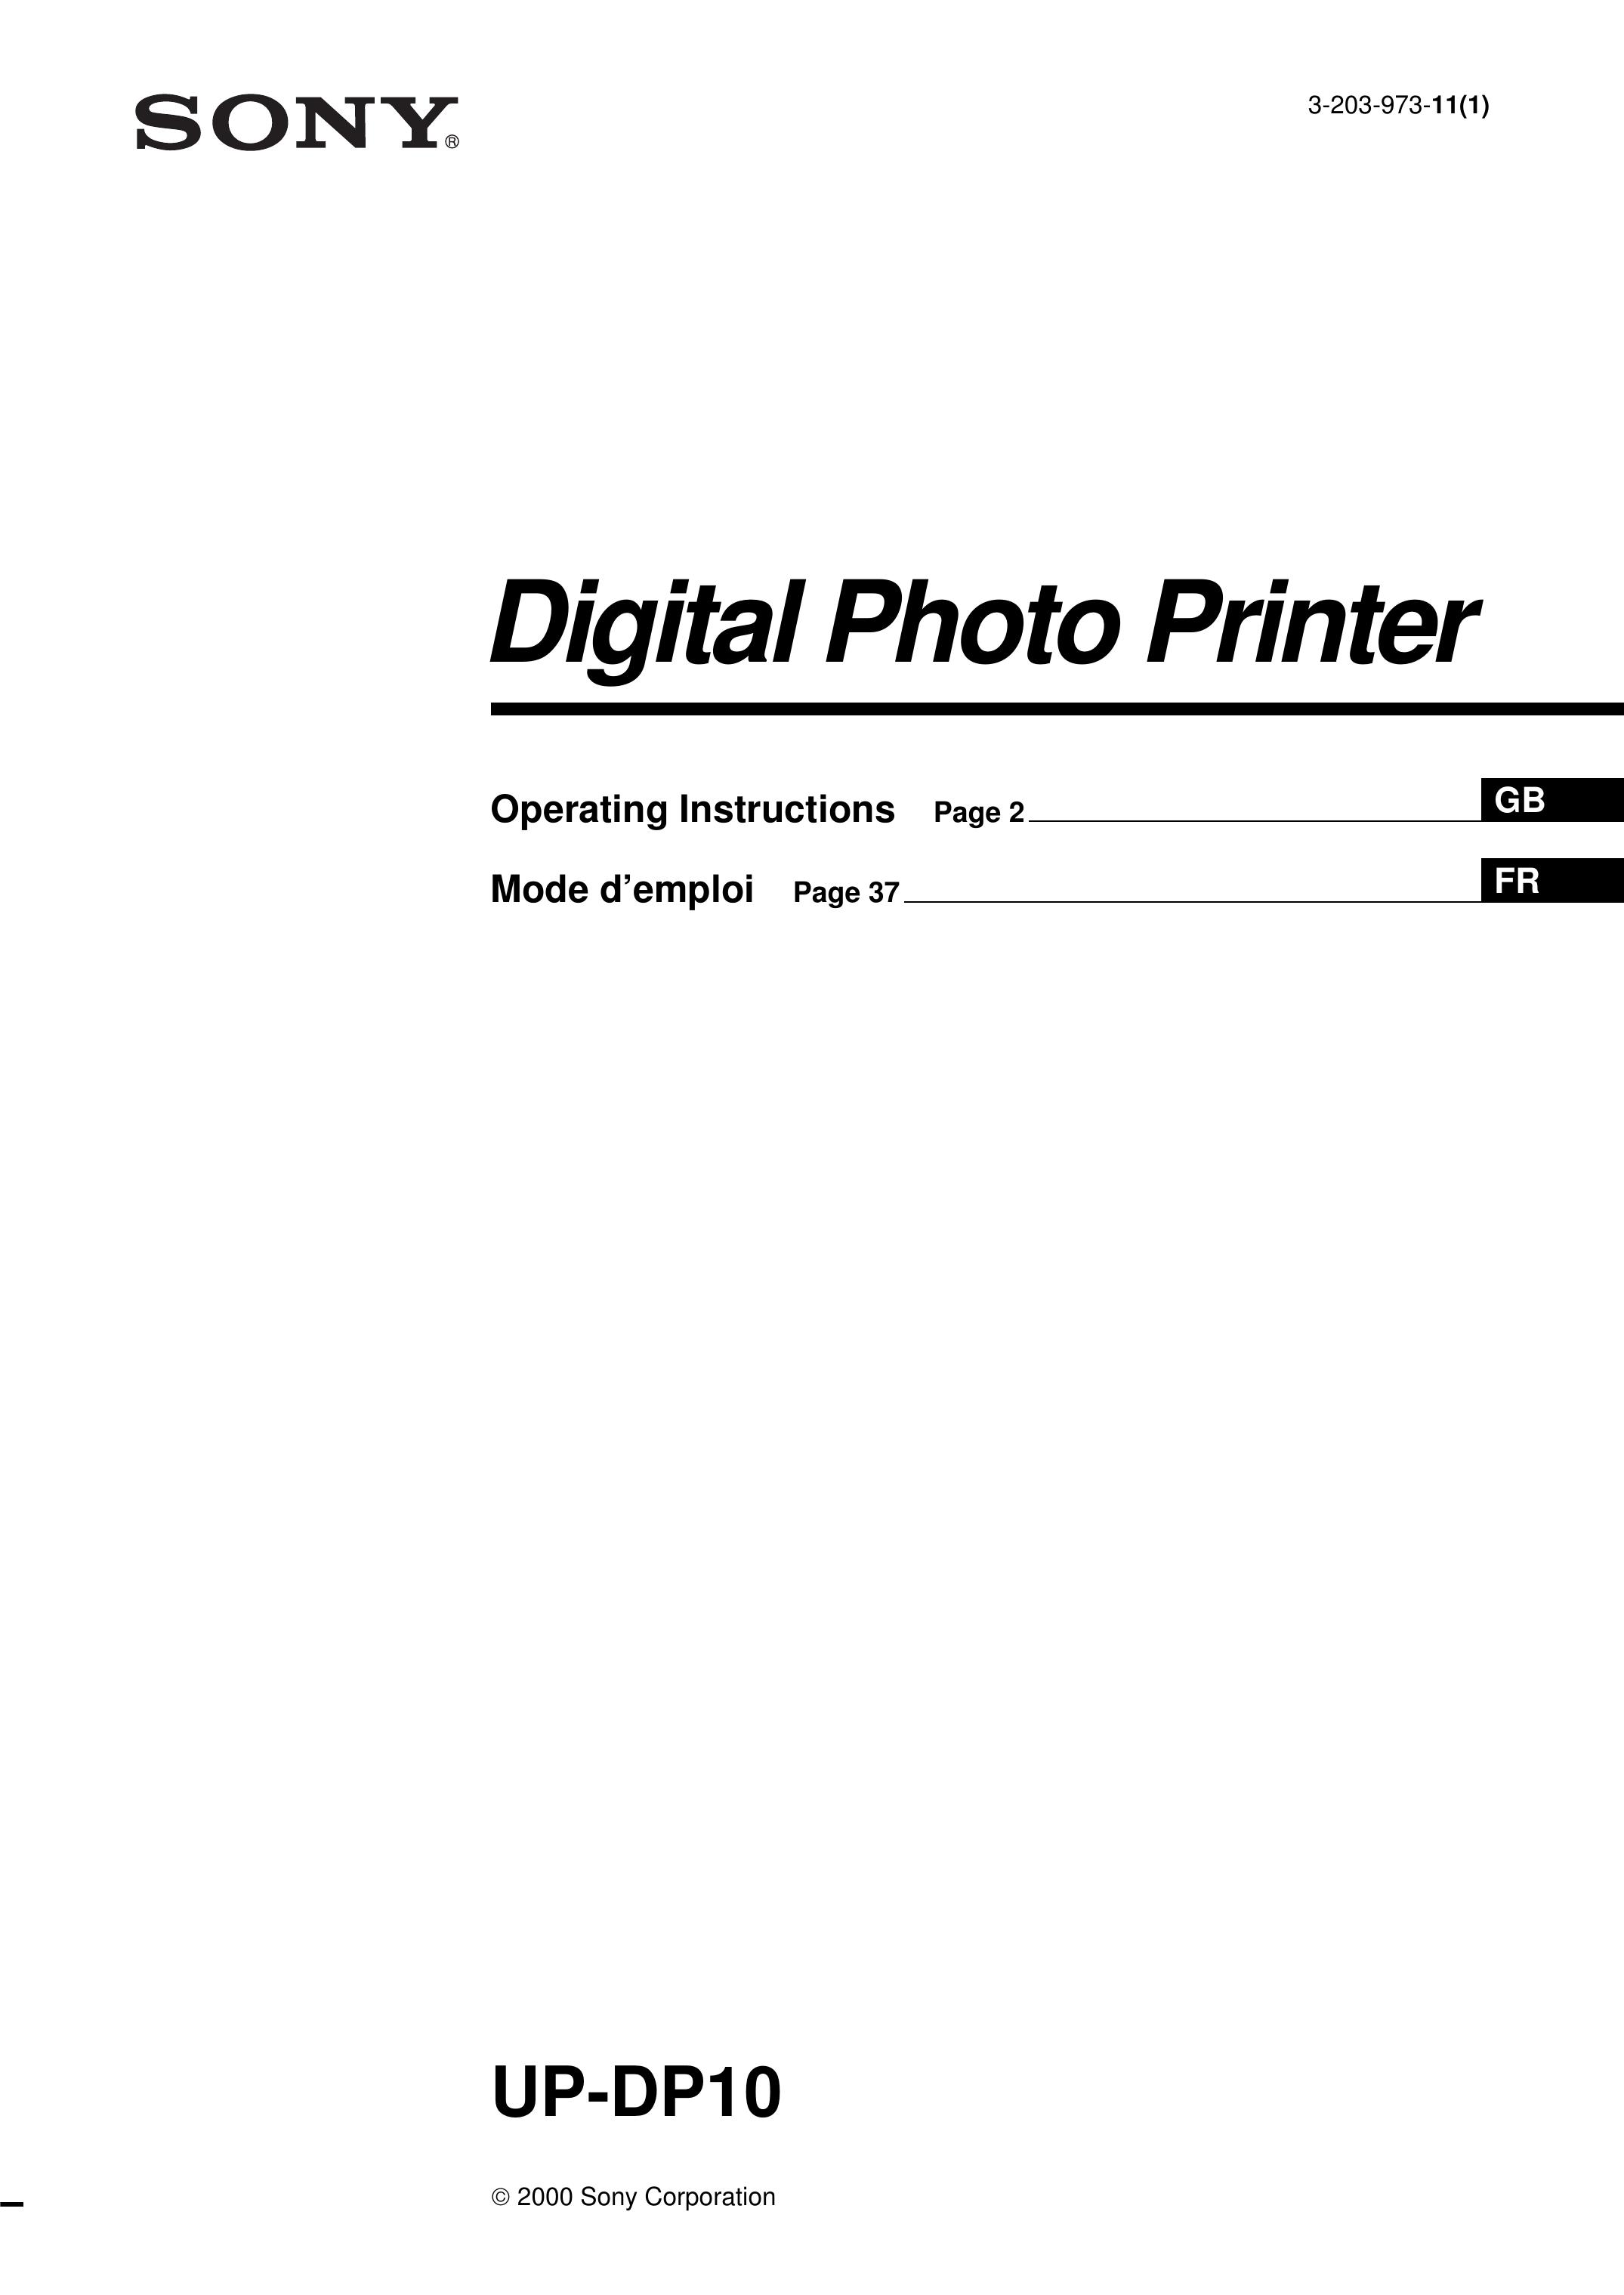 Sony UP-DP10 Photo Printer User Manual